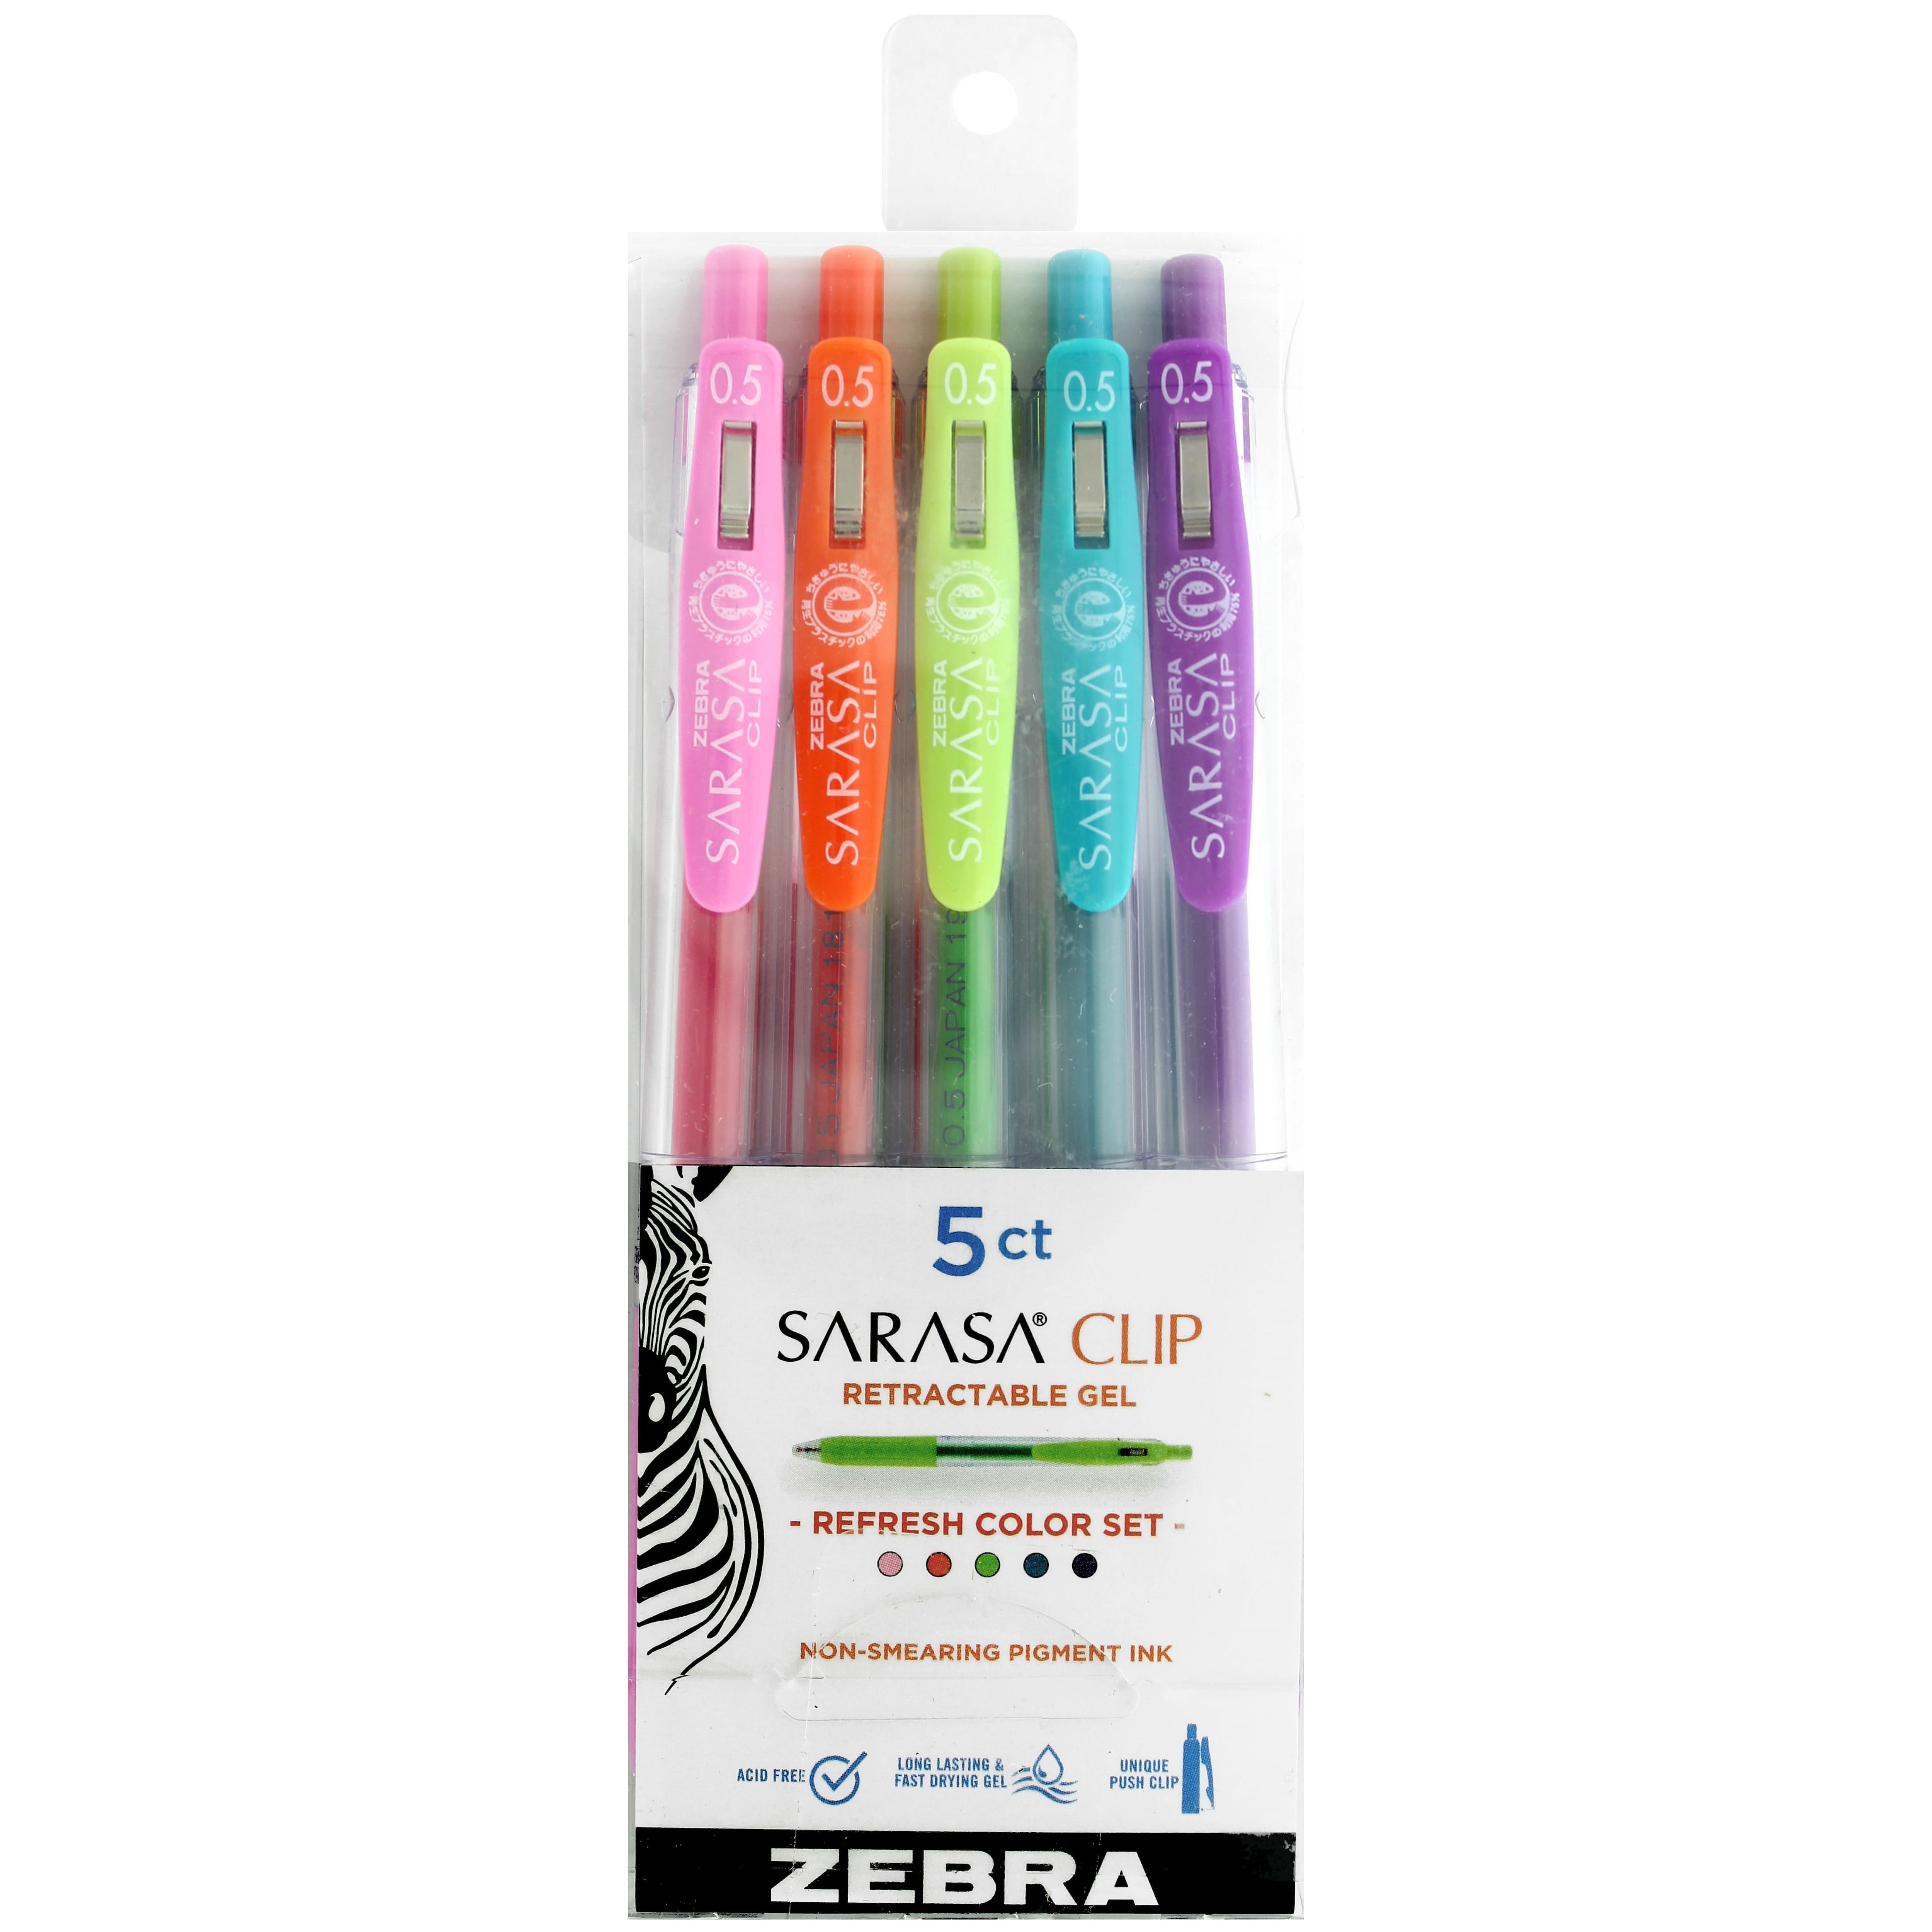 Acid Free Gel Ink Pens for scrapbooking